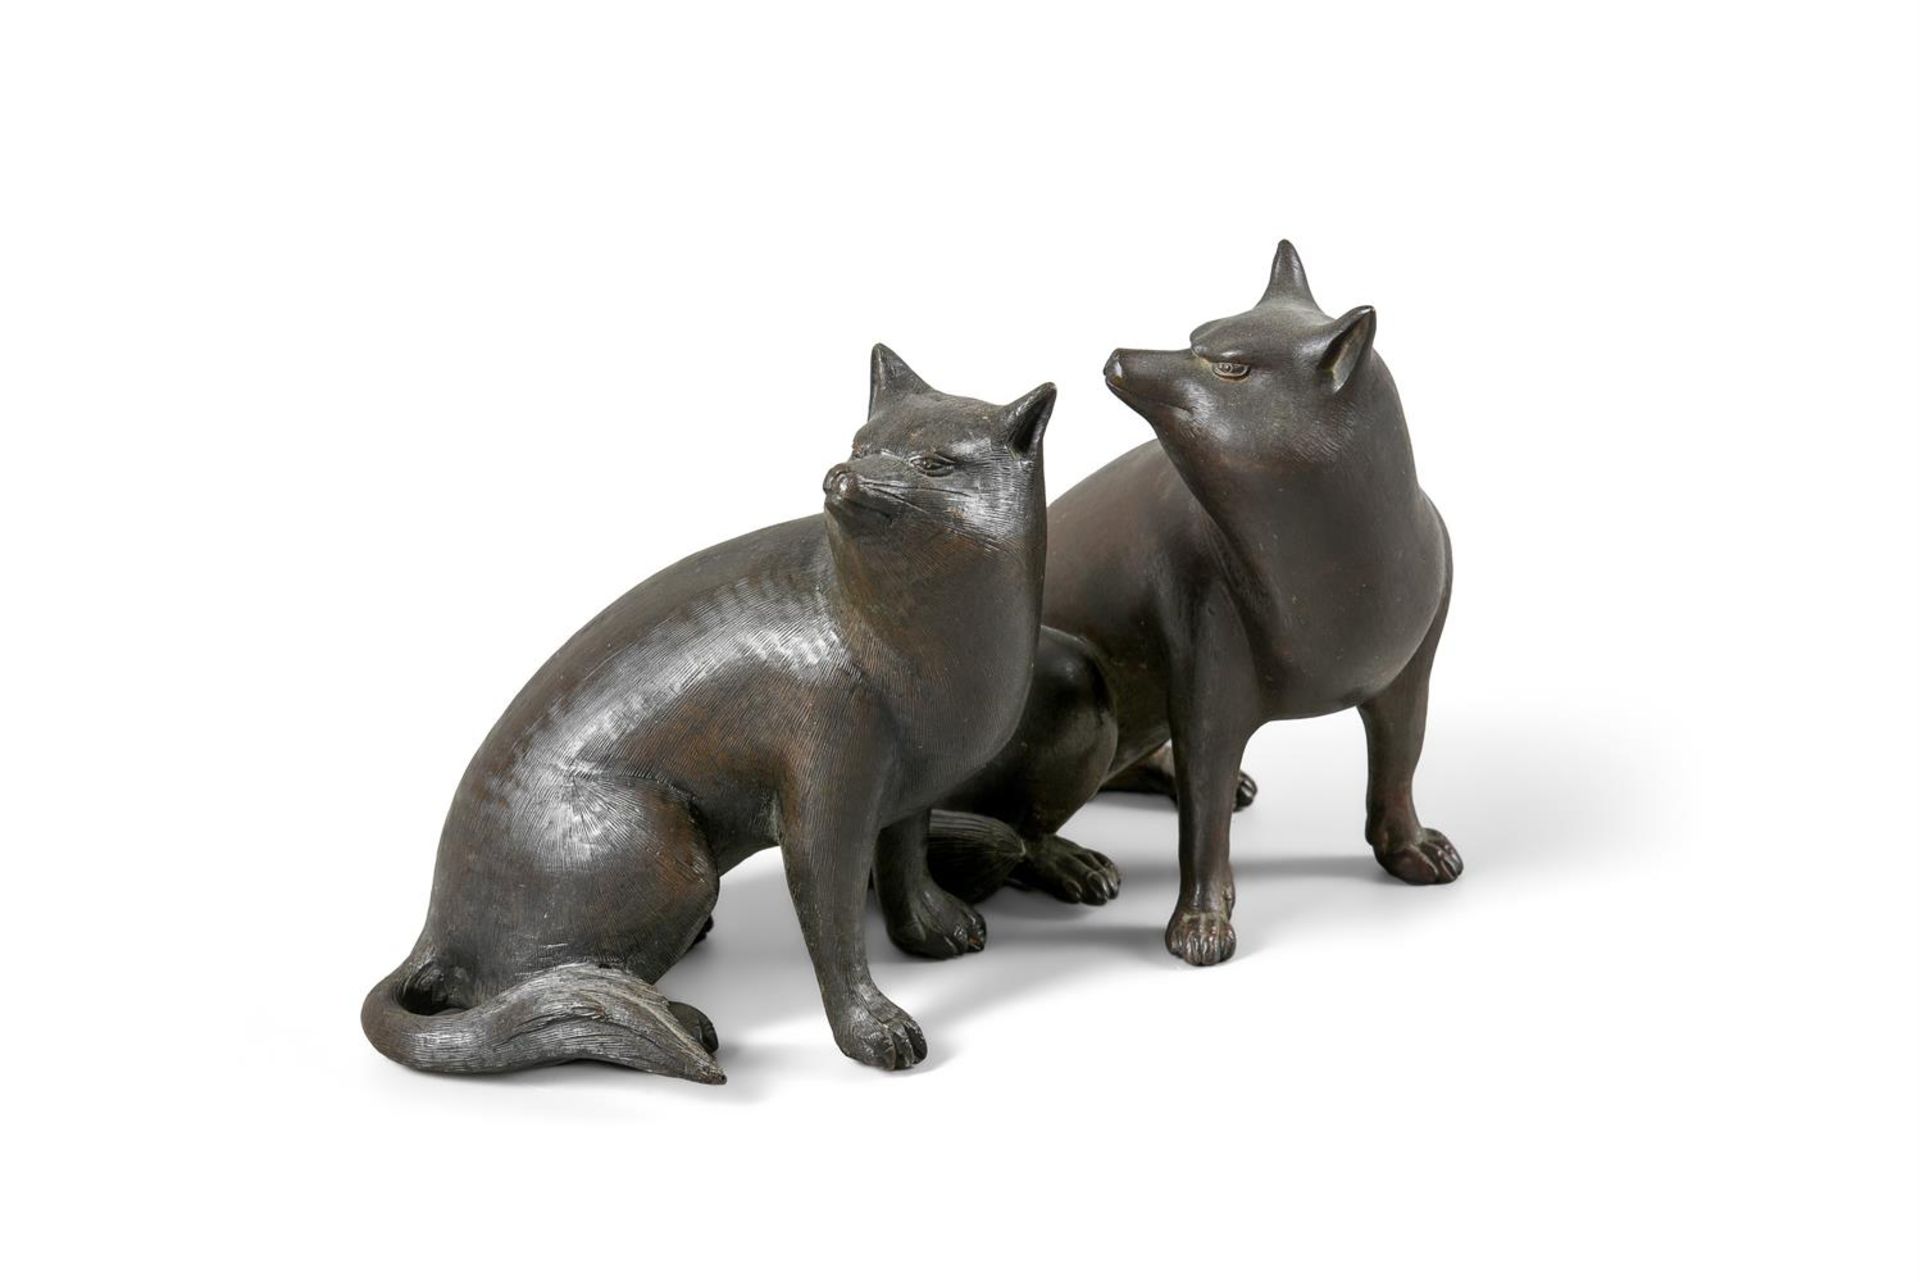 Two Japanese bronze models of Tanuki